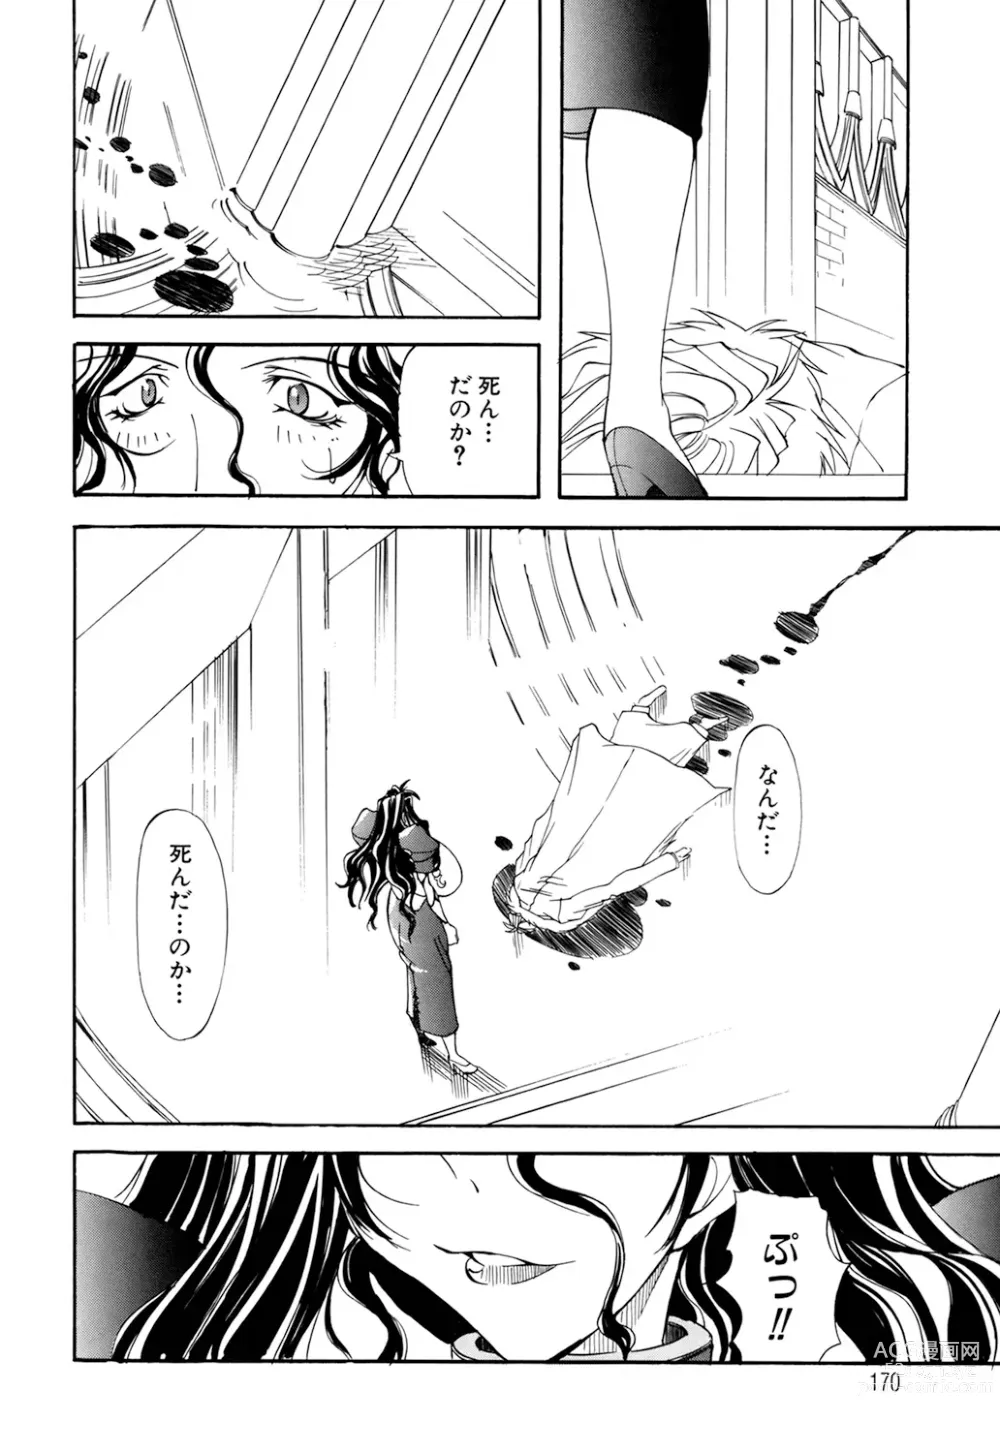 Page 168 of manga Shuukakusai Dainishou - Black Mass